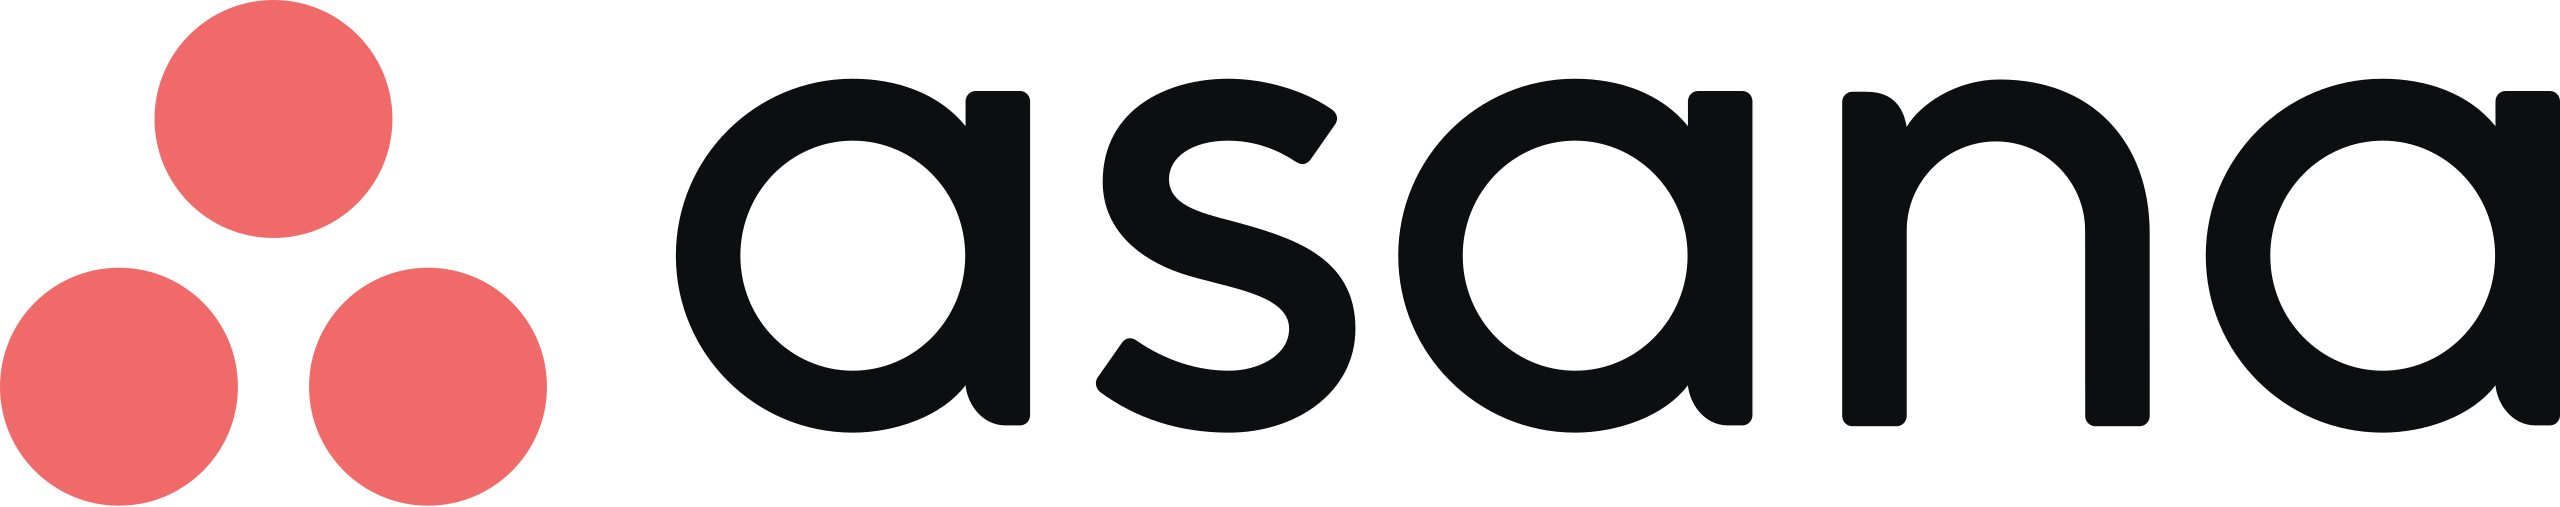 asana logo integration scytale